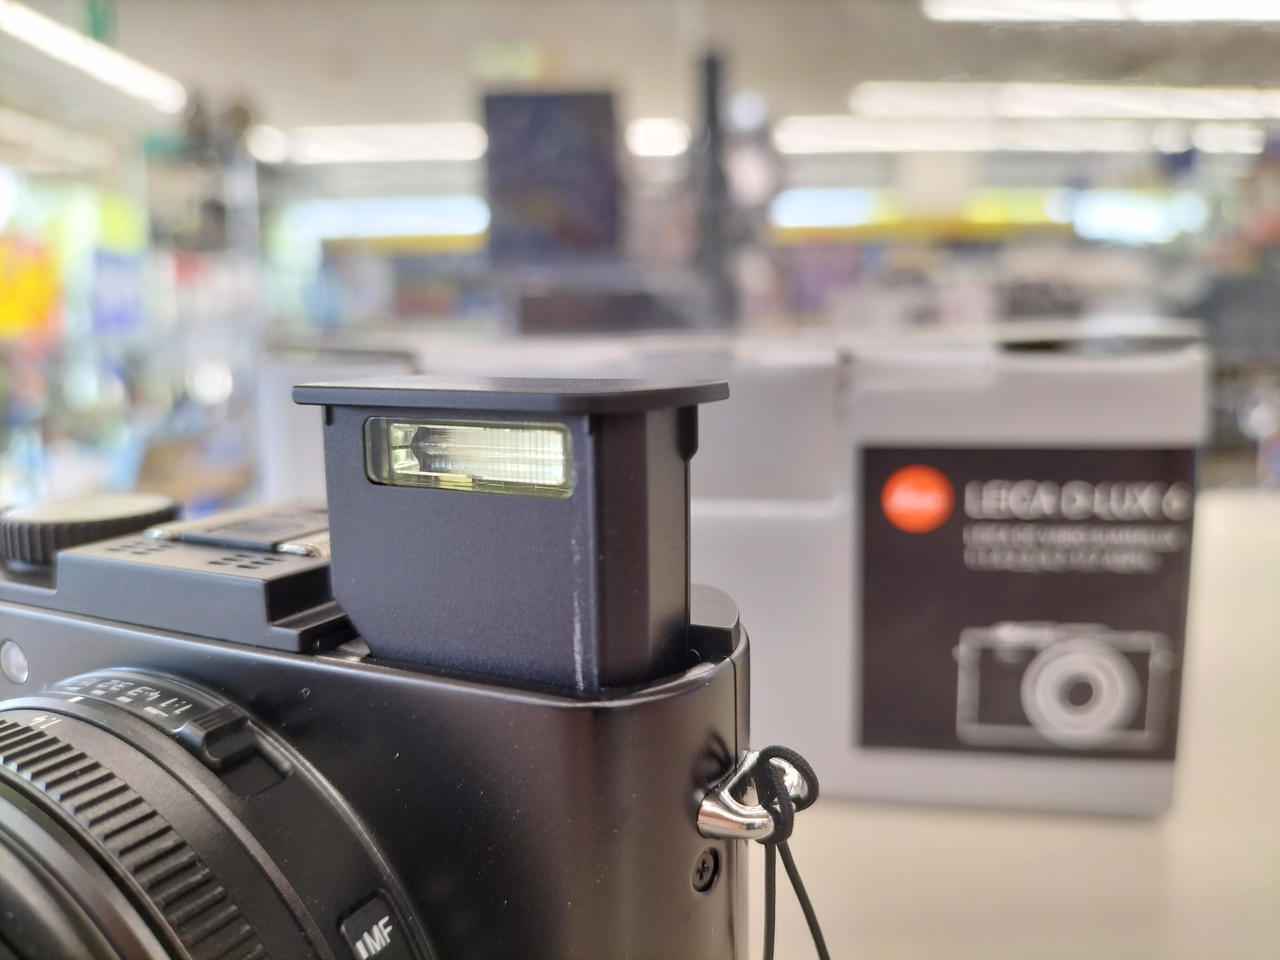 Near Mint Leica Digital Camera D-LUX 6 w/box Used in Japan – The